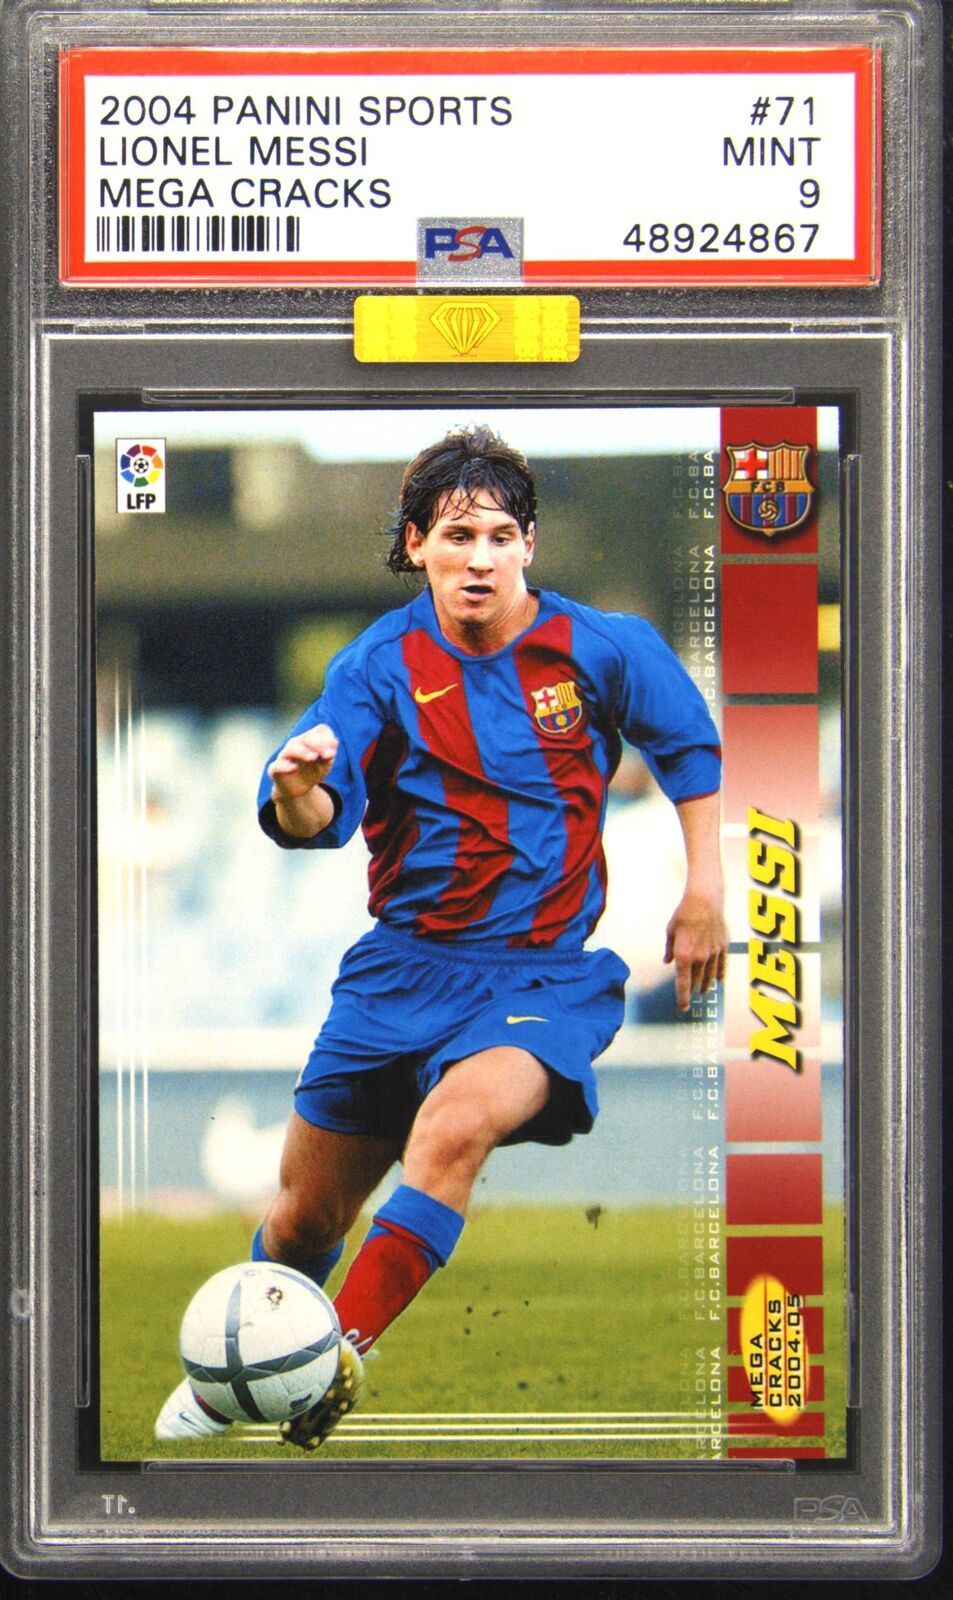 2004 Panini Sports Mega Cracks #71 Lionel Messi Rookie RC PSA 9